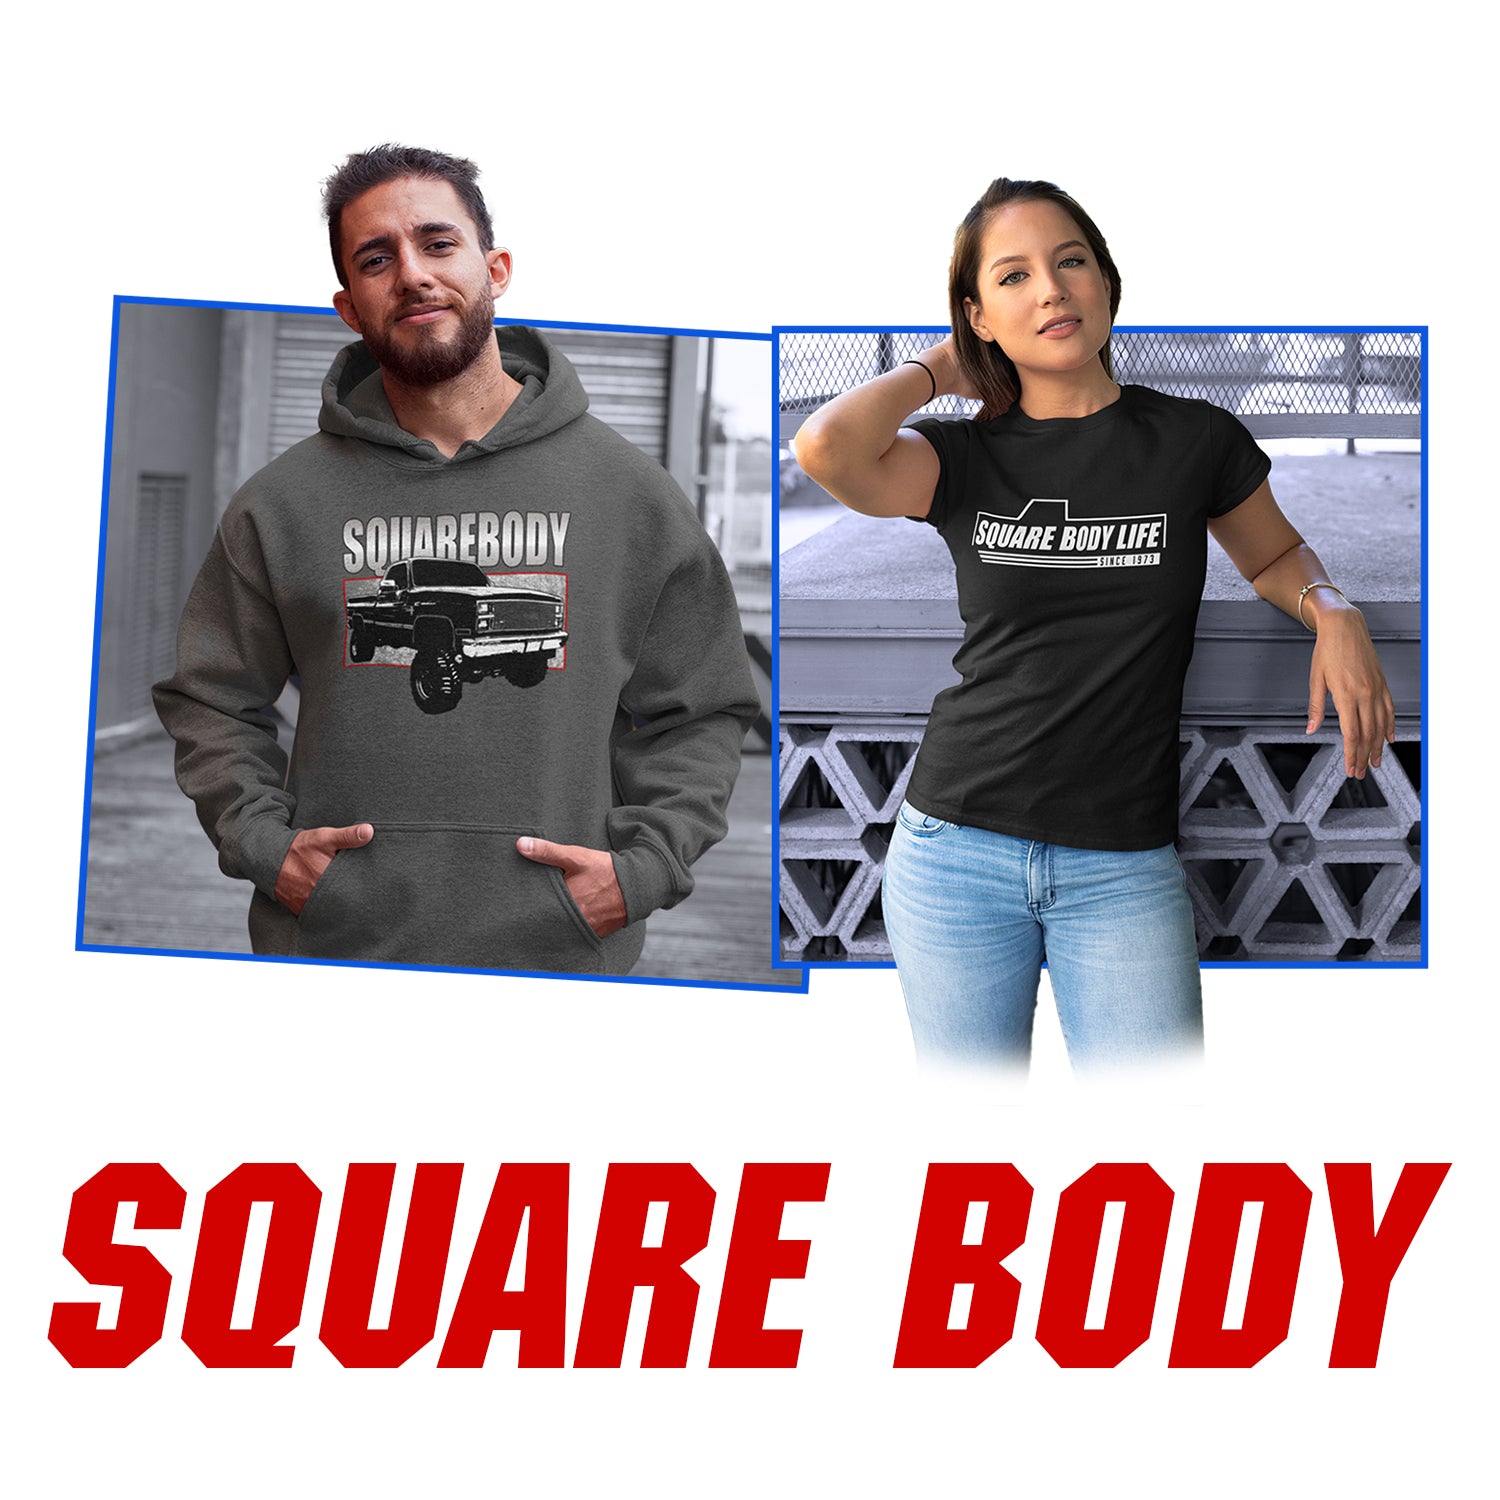 Squarebody Shirt, Square Body Shirt, GMC Jimmy Apparel tee T-Shirt